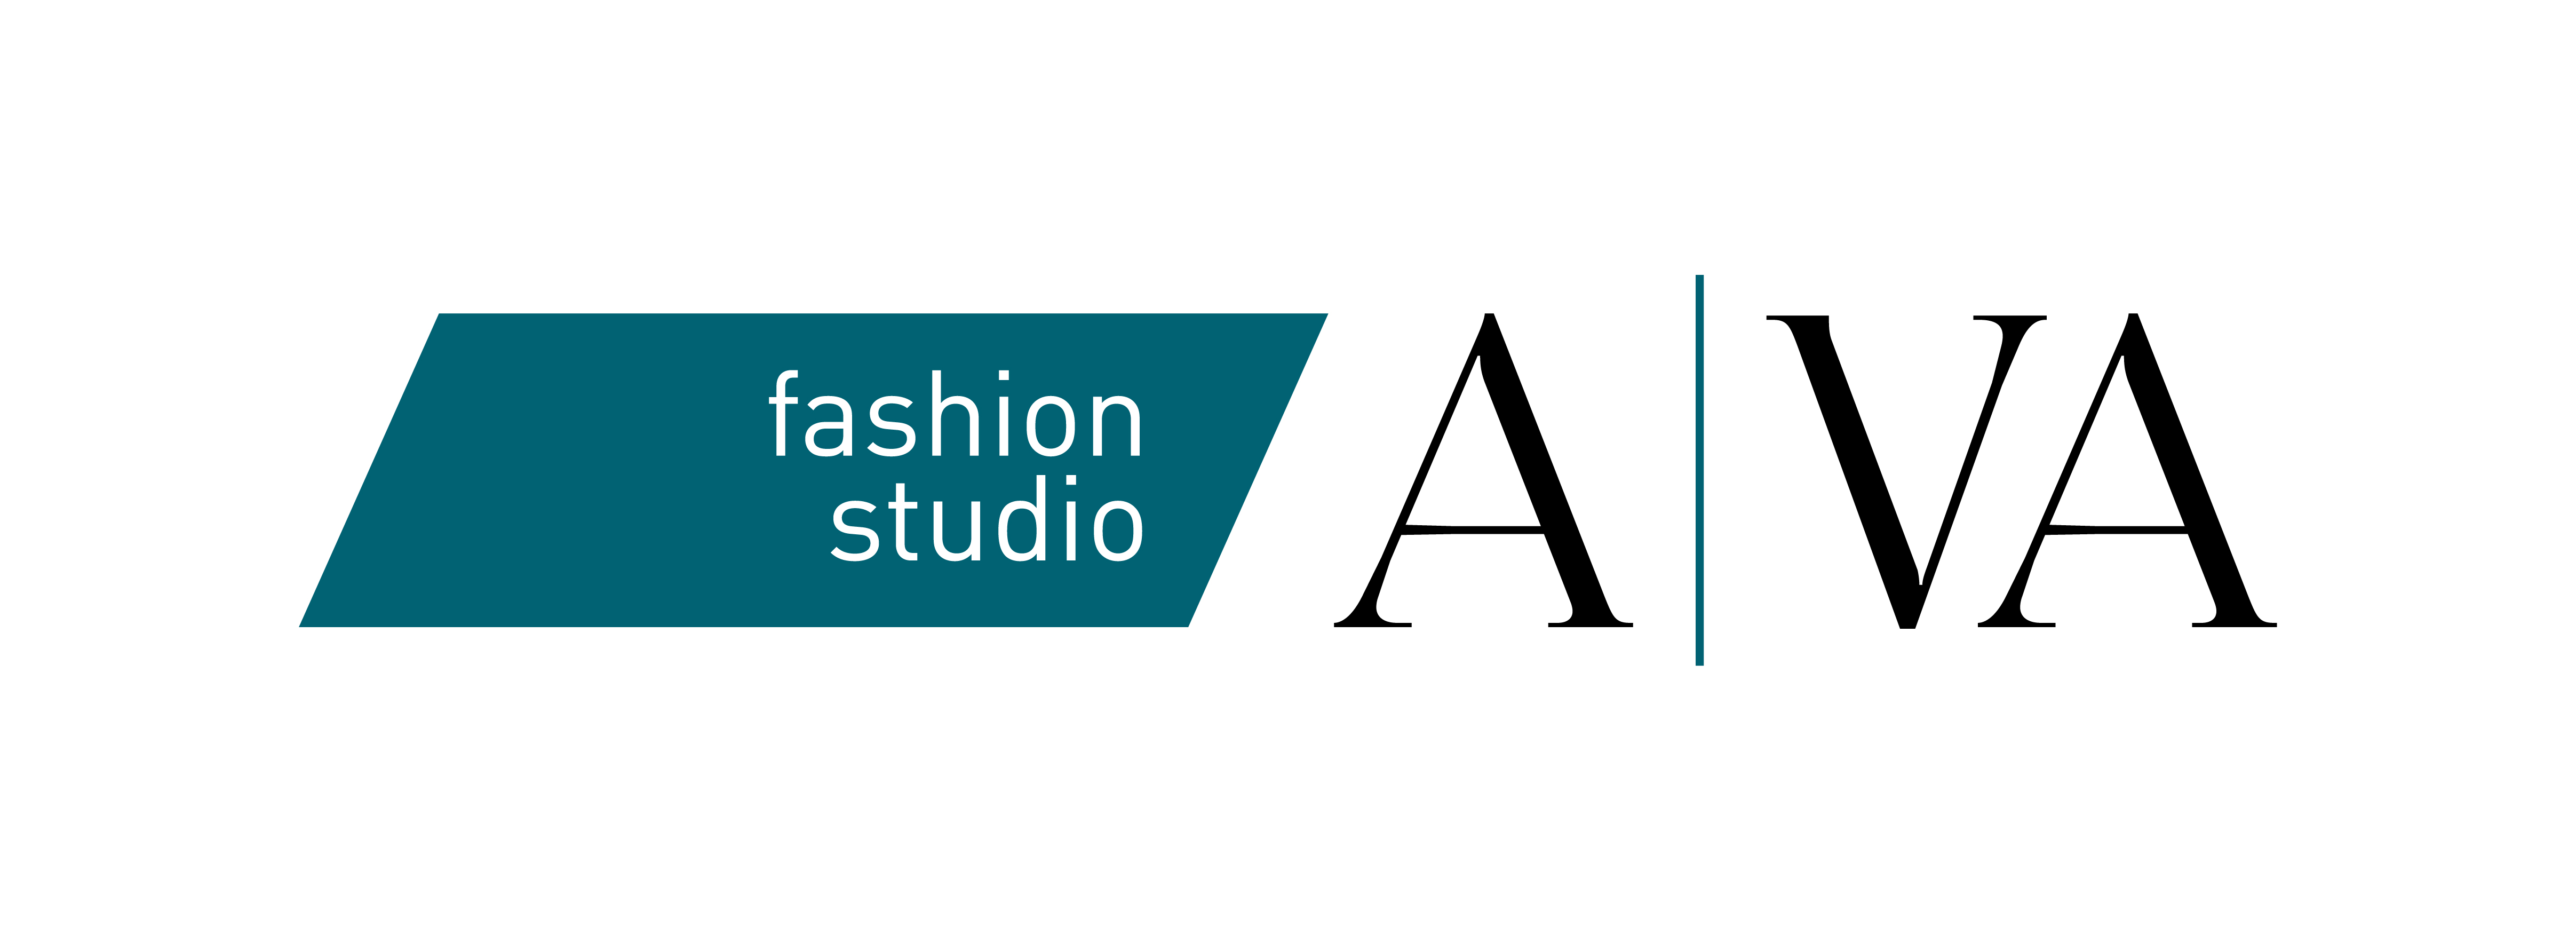 Fashion Studio A|VA